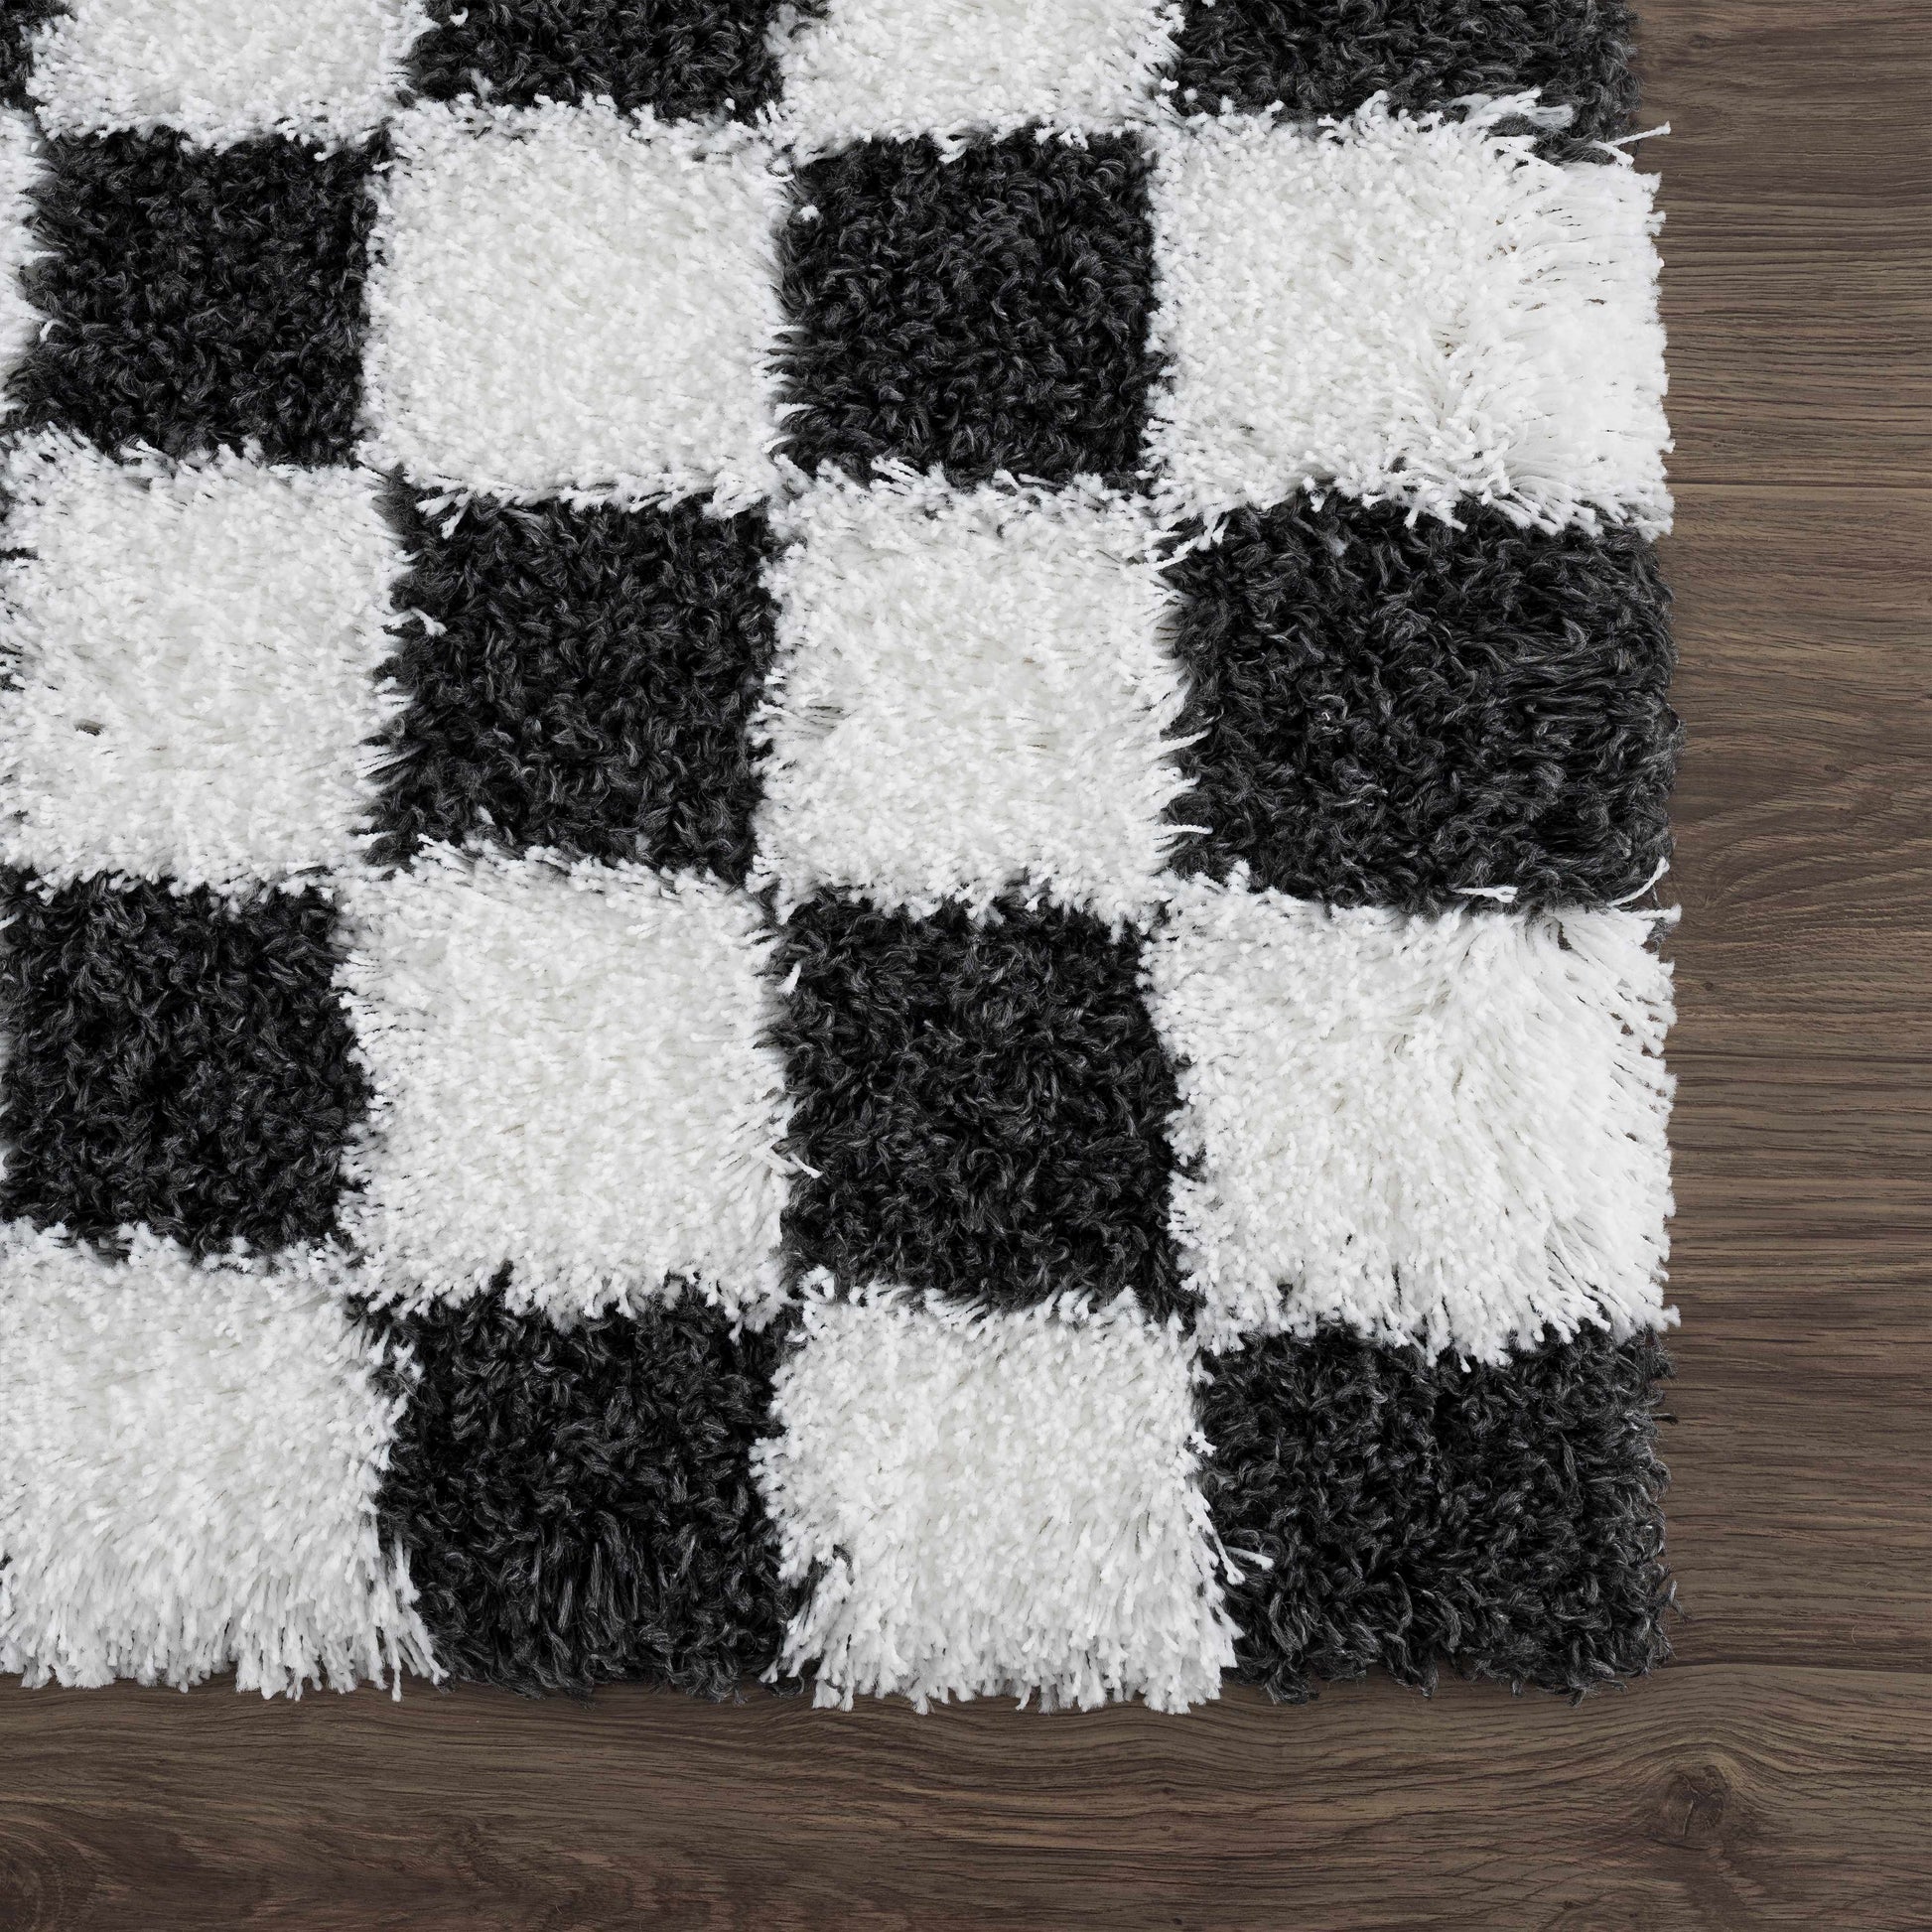 Atira Black & White Checkered Area Rug.